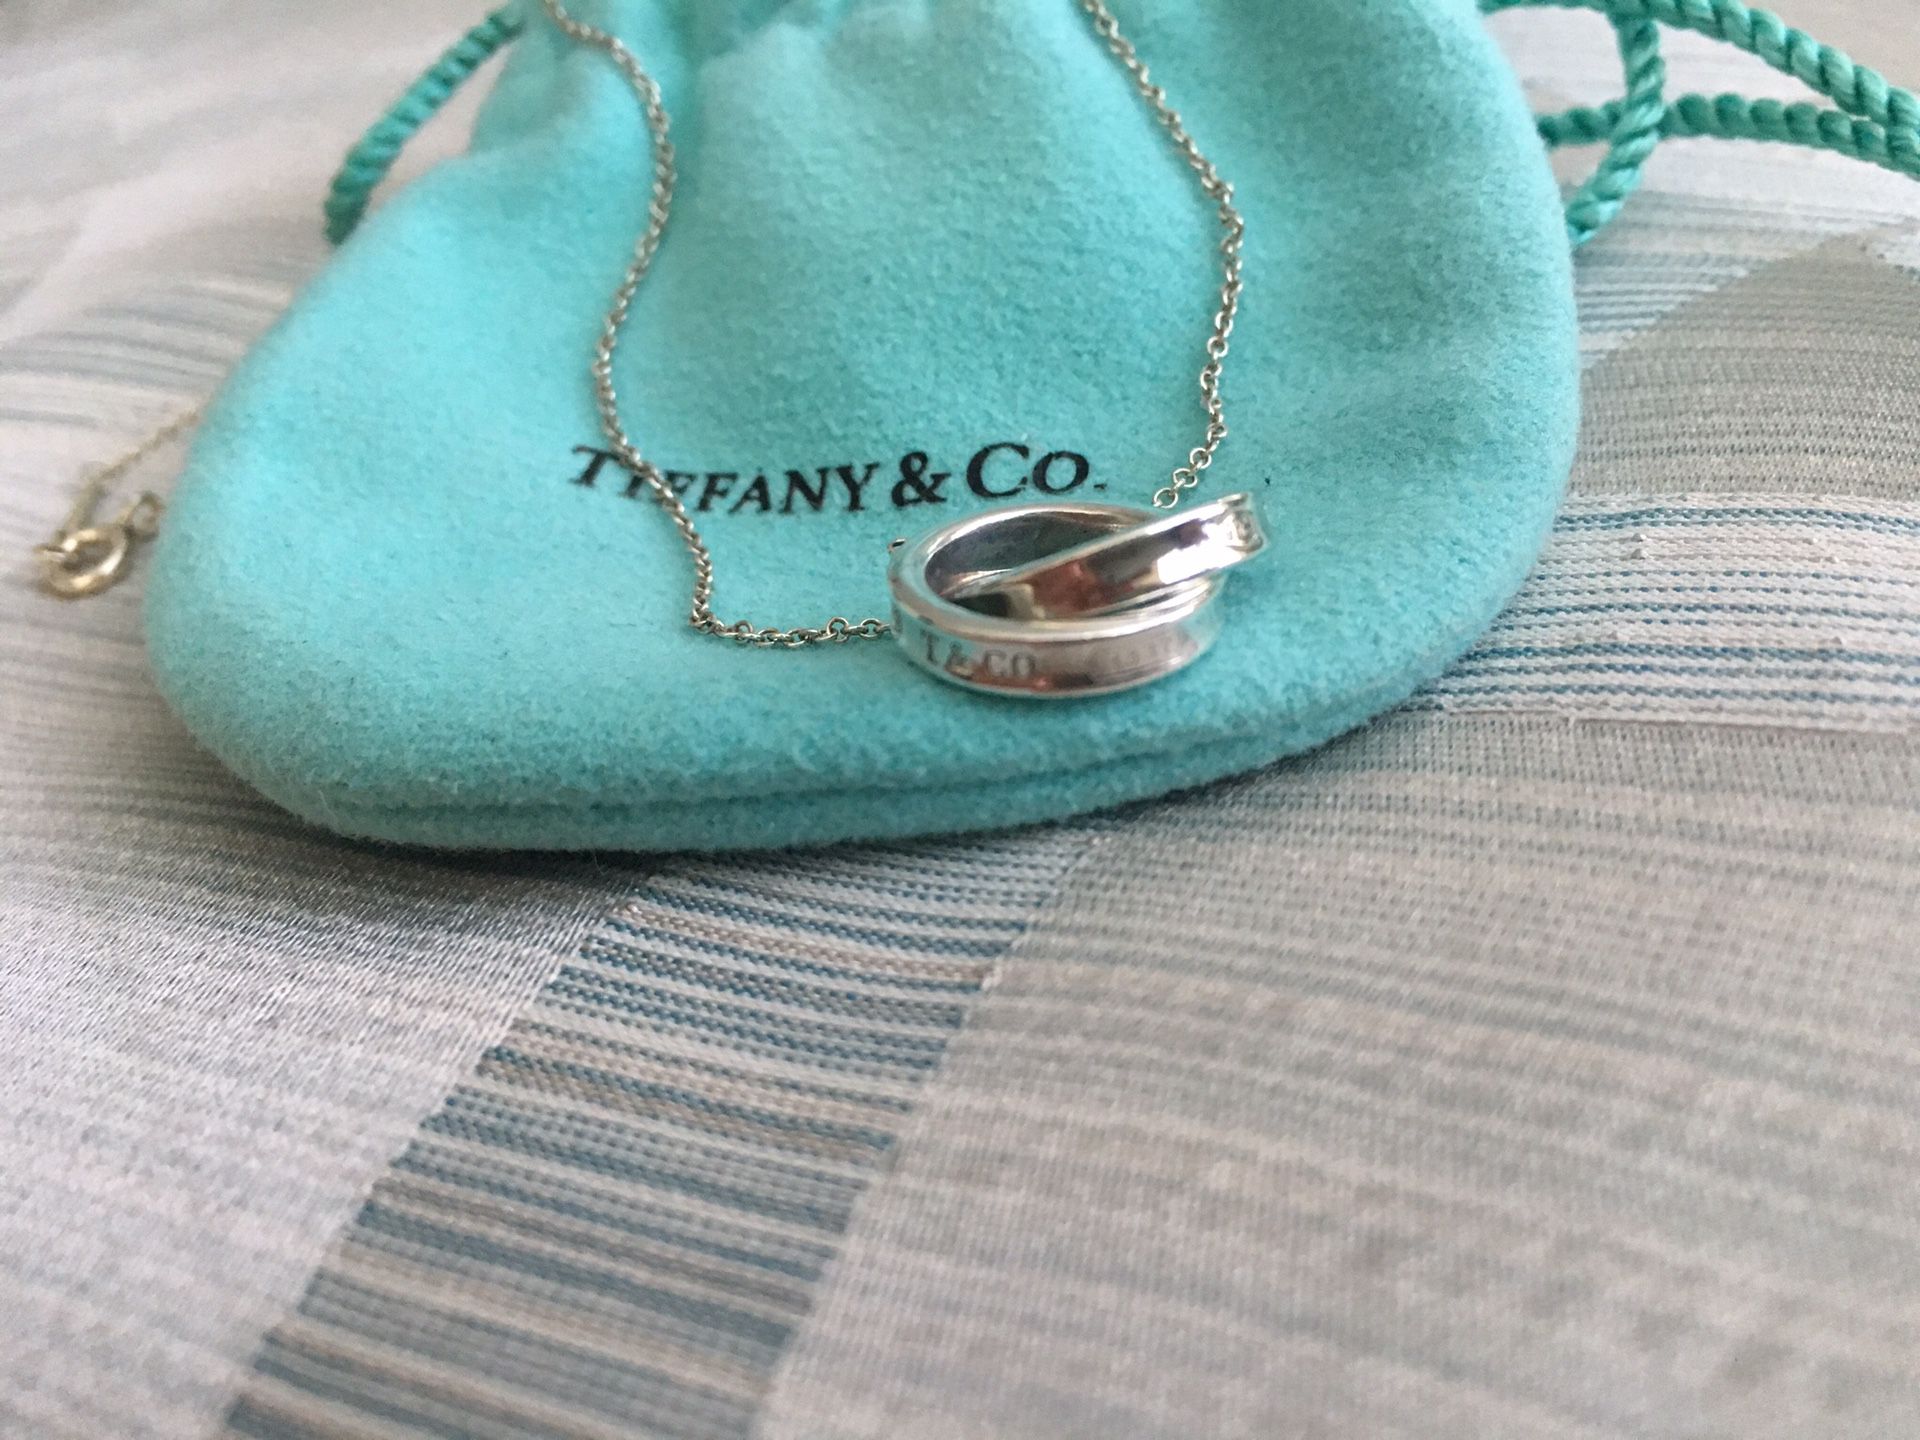 Tiffany & Co. 1837 Interlocking Circles Pendant Necklace w/pouch